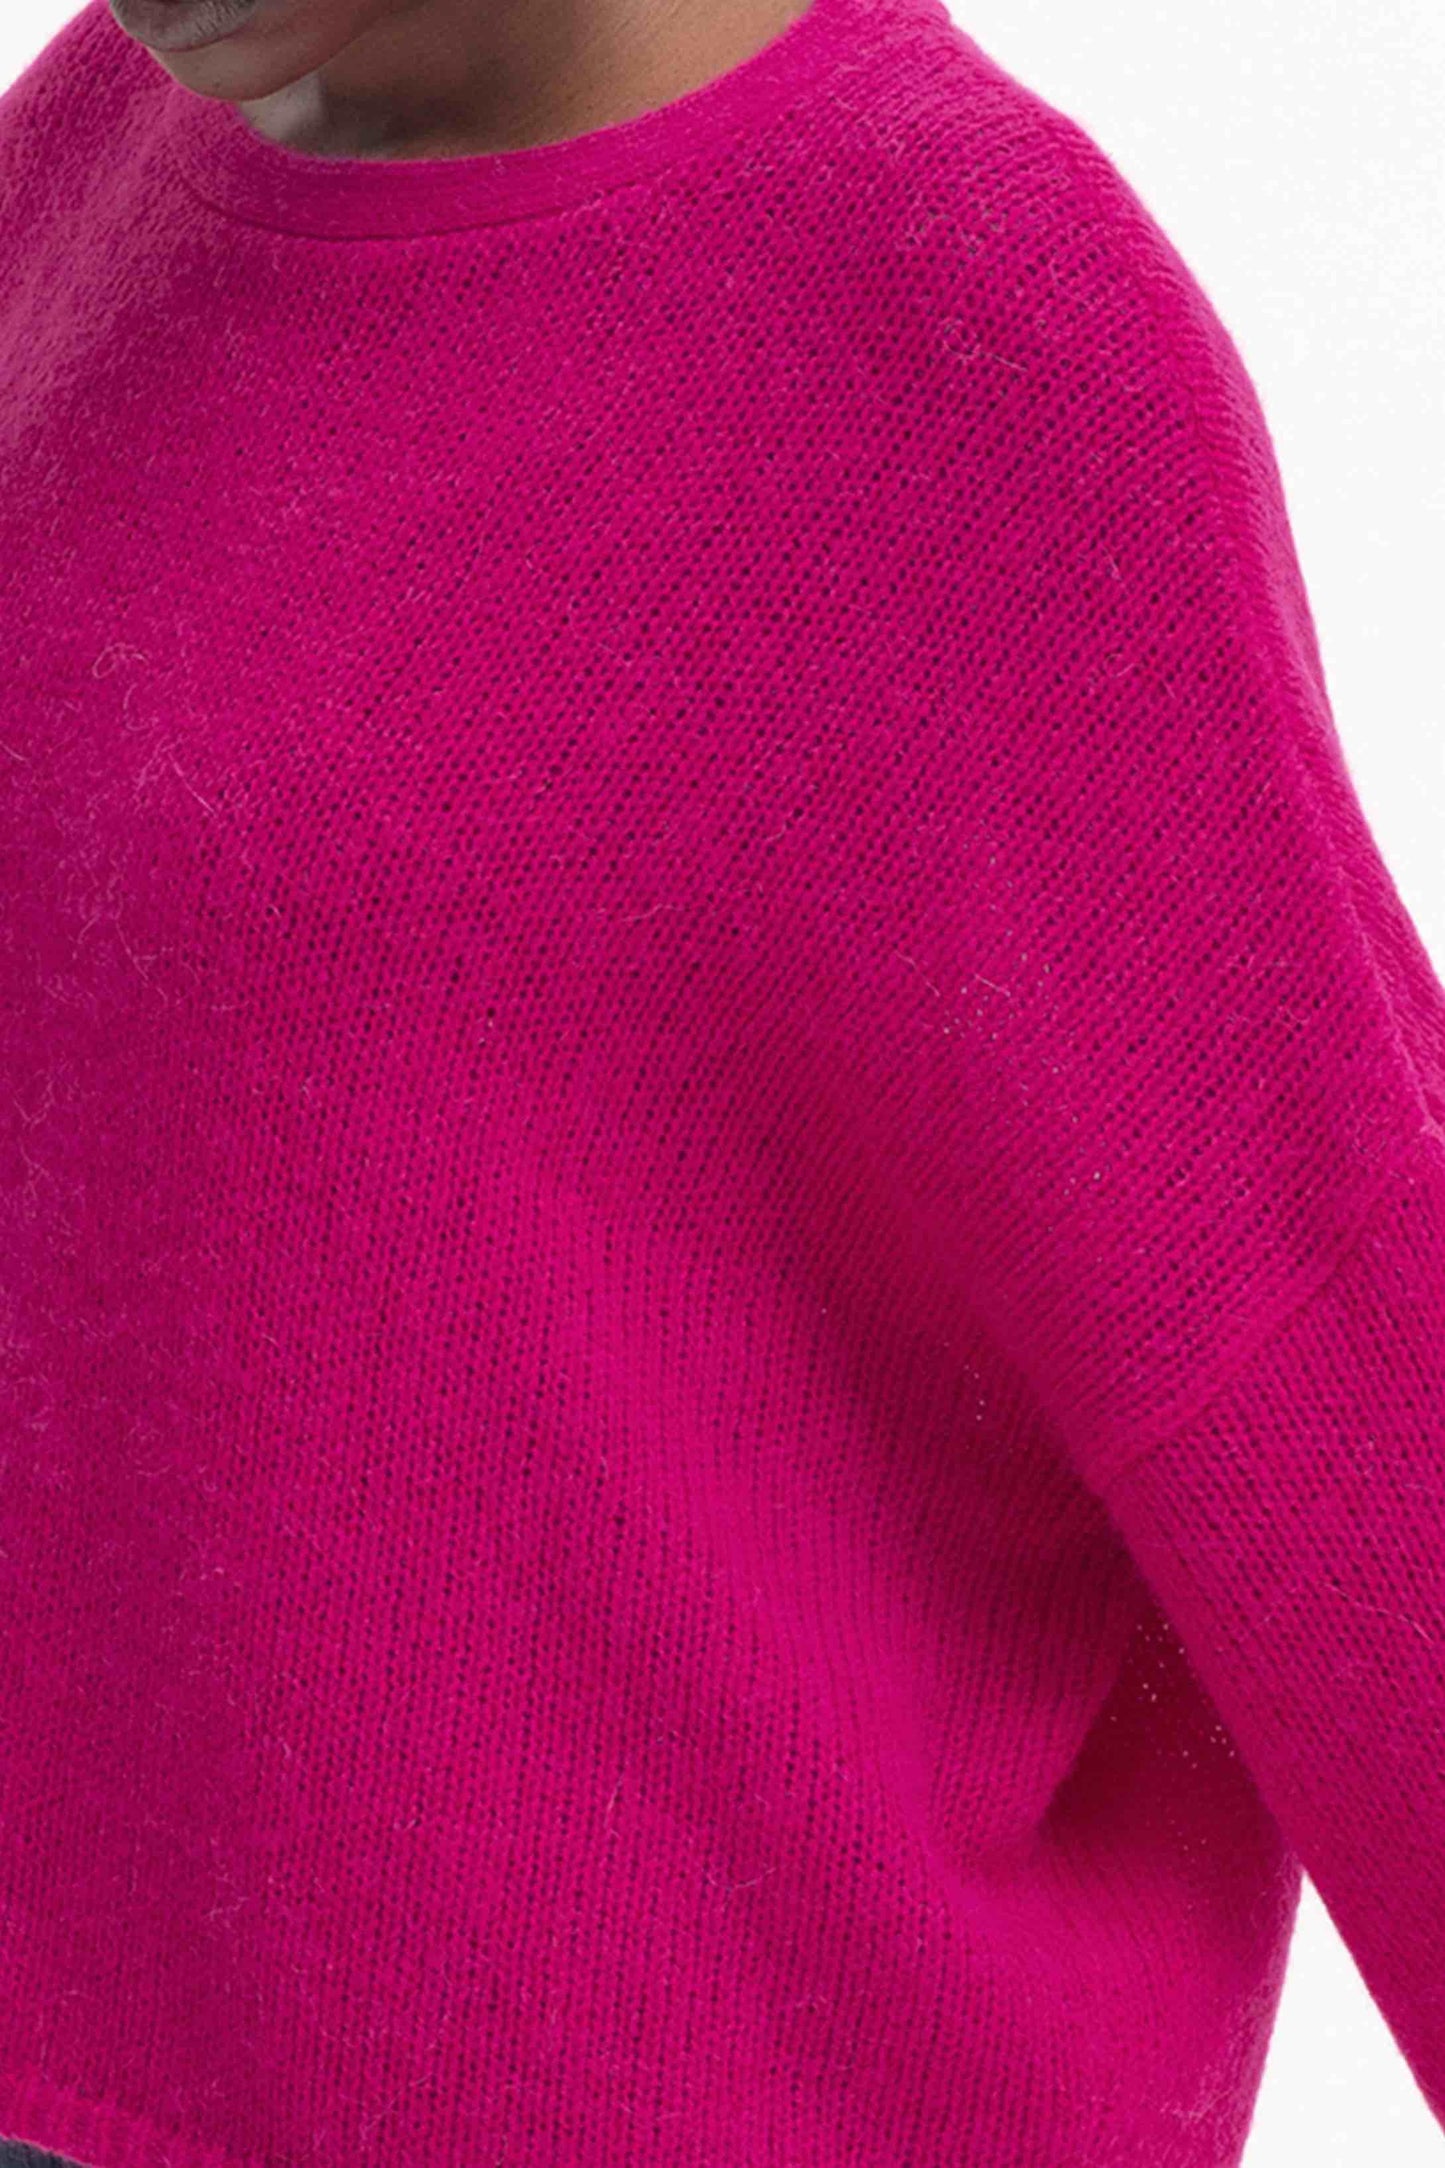 ELK Agna Sweater - Bright Pink